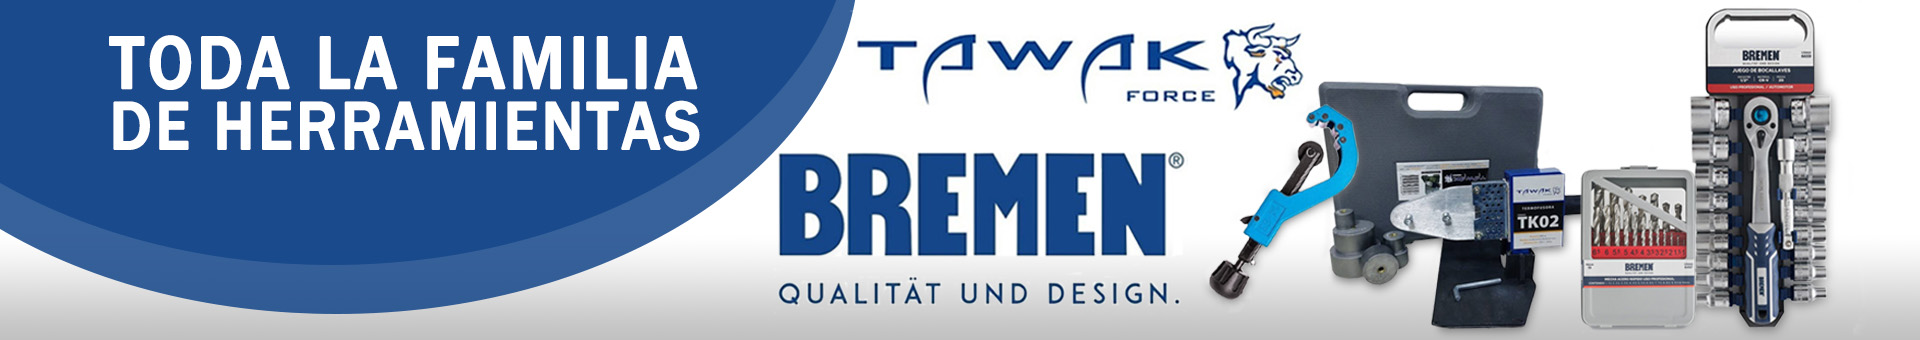 Banner Bremen Tawak Escritorio